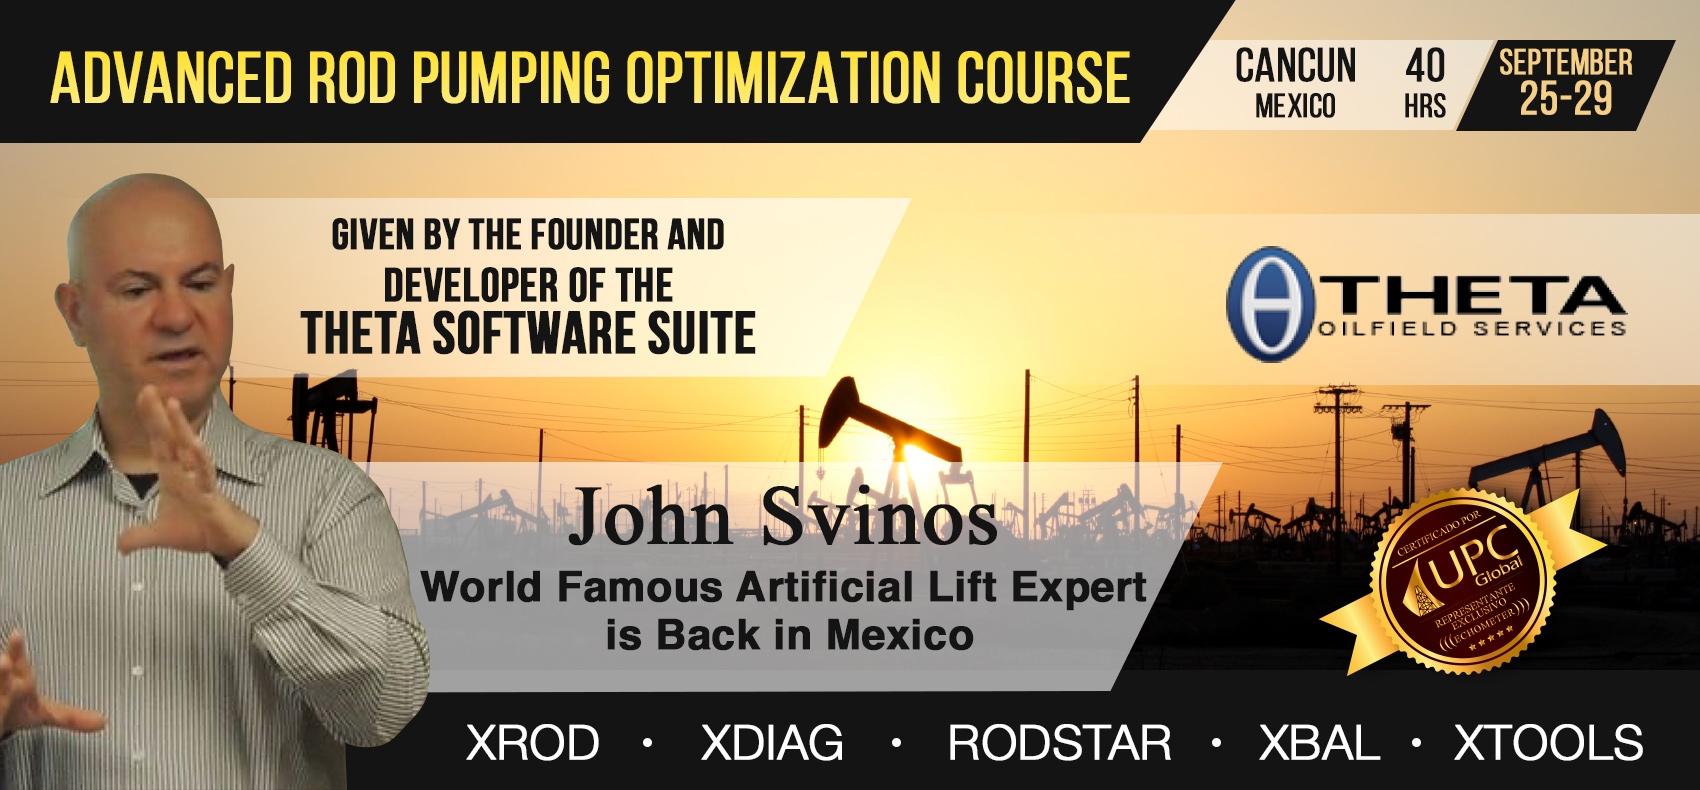 Rod Pumping Optimization Course by John Svinos